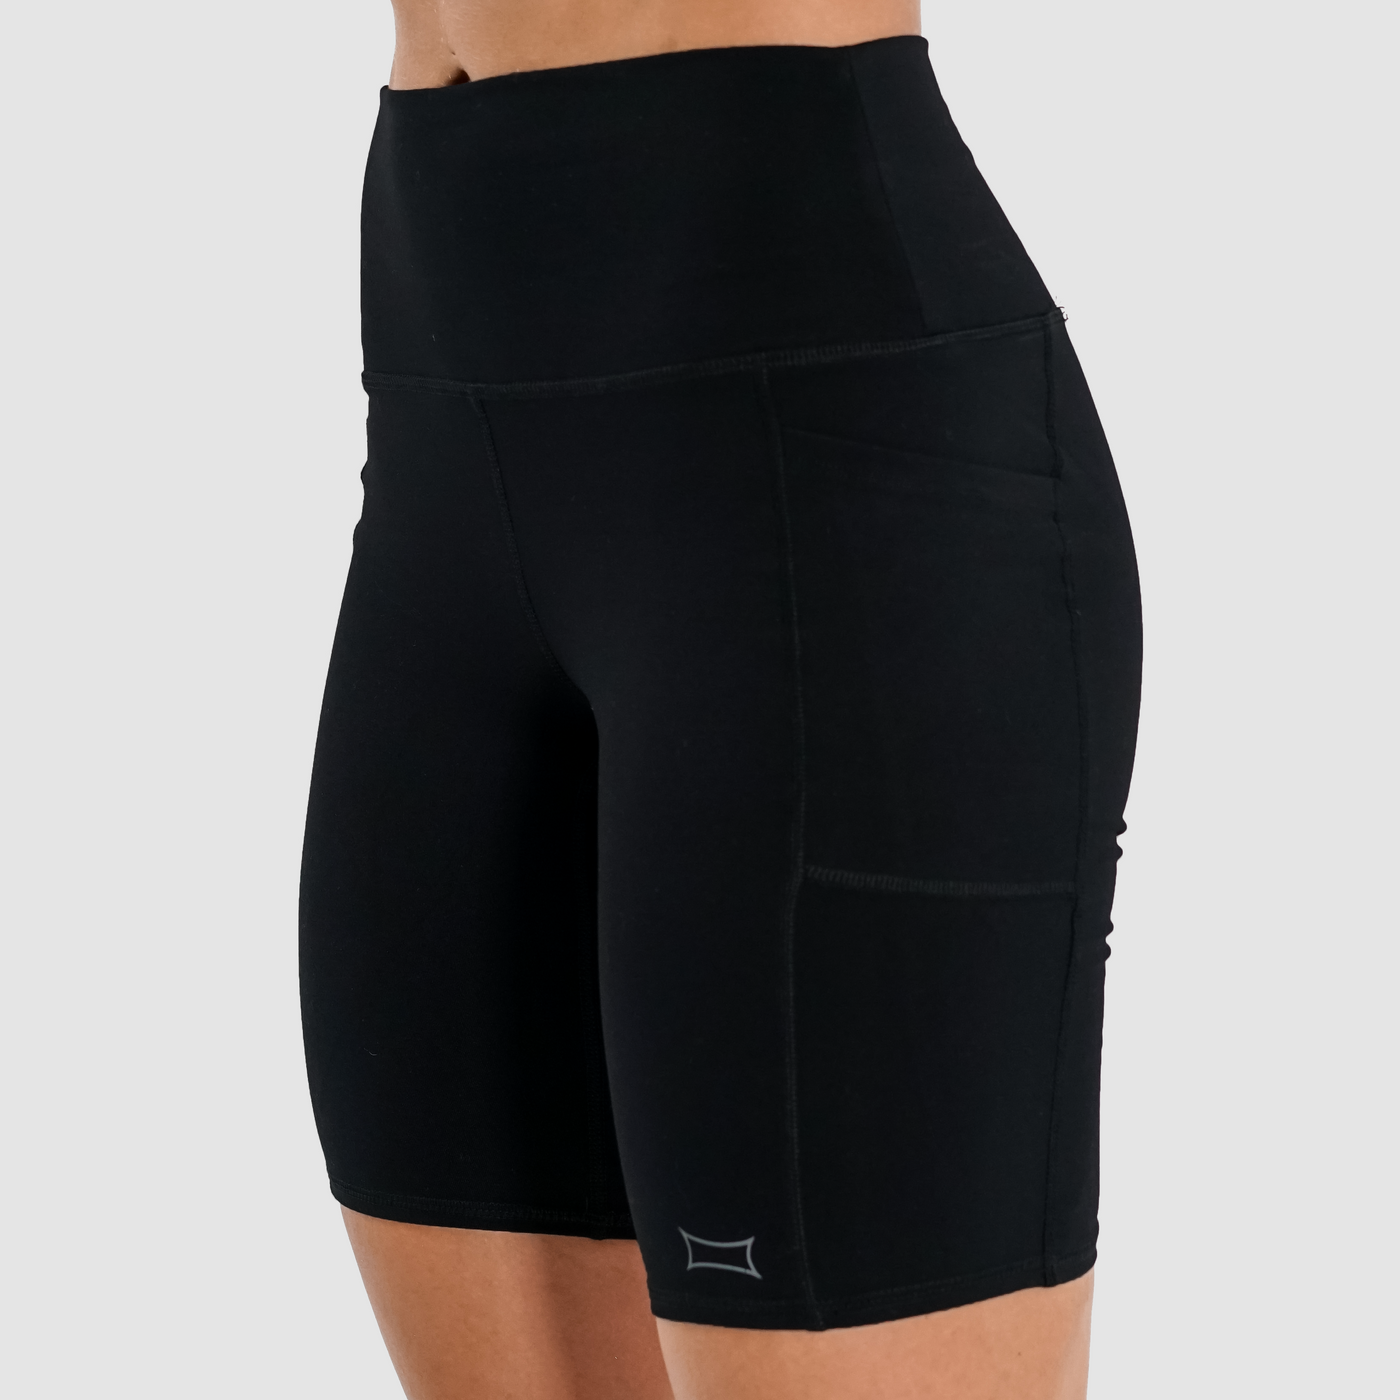 Women's Bike Shorts - OUTLET